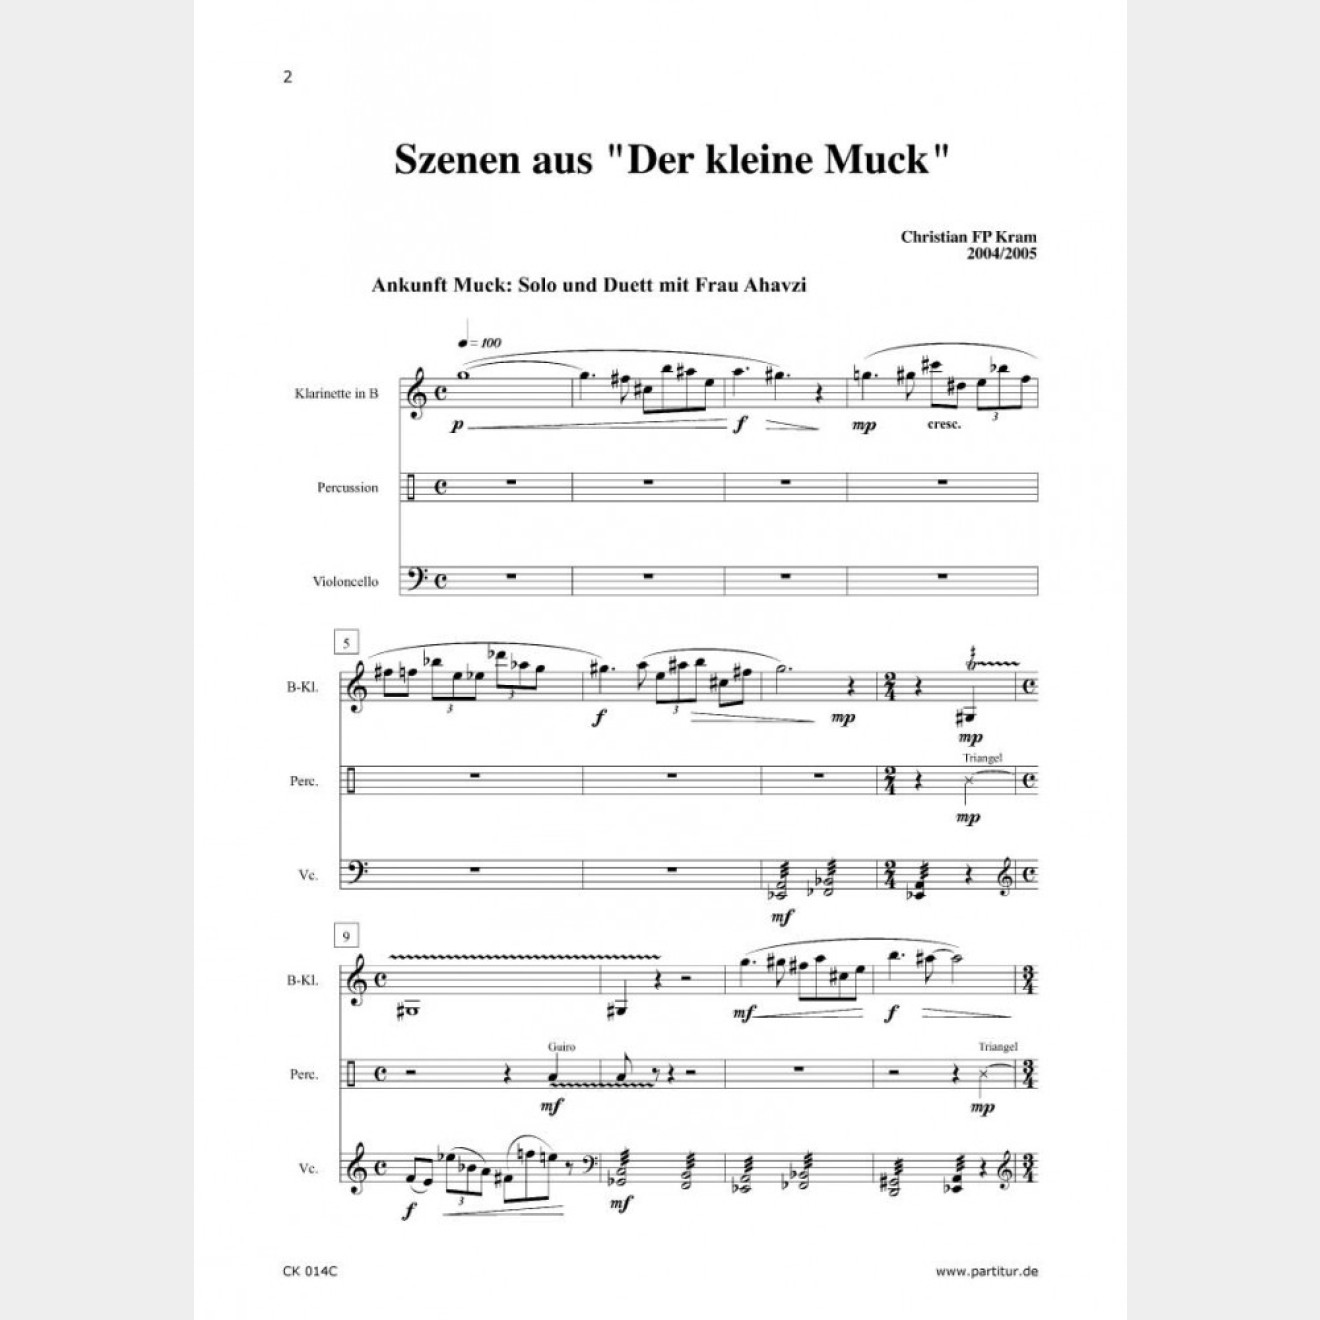 Ankunft Muck: Solo und Duett mit Frau Ahavzi, 2`25`` (Score)